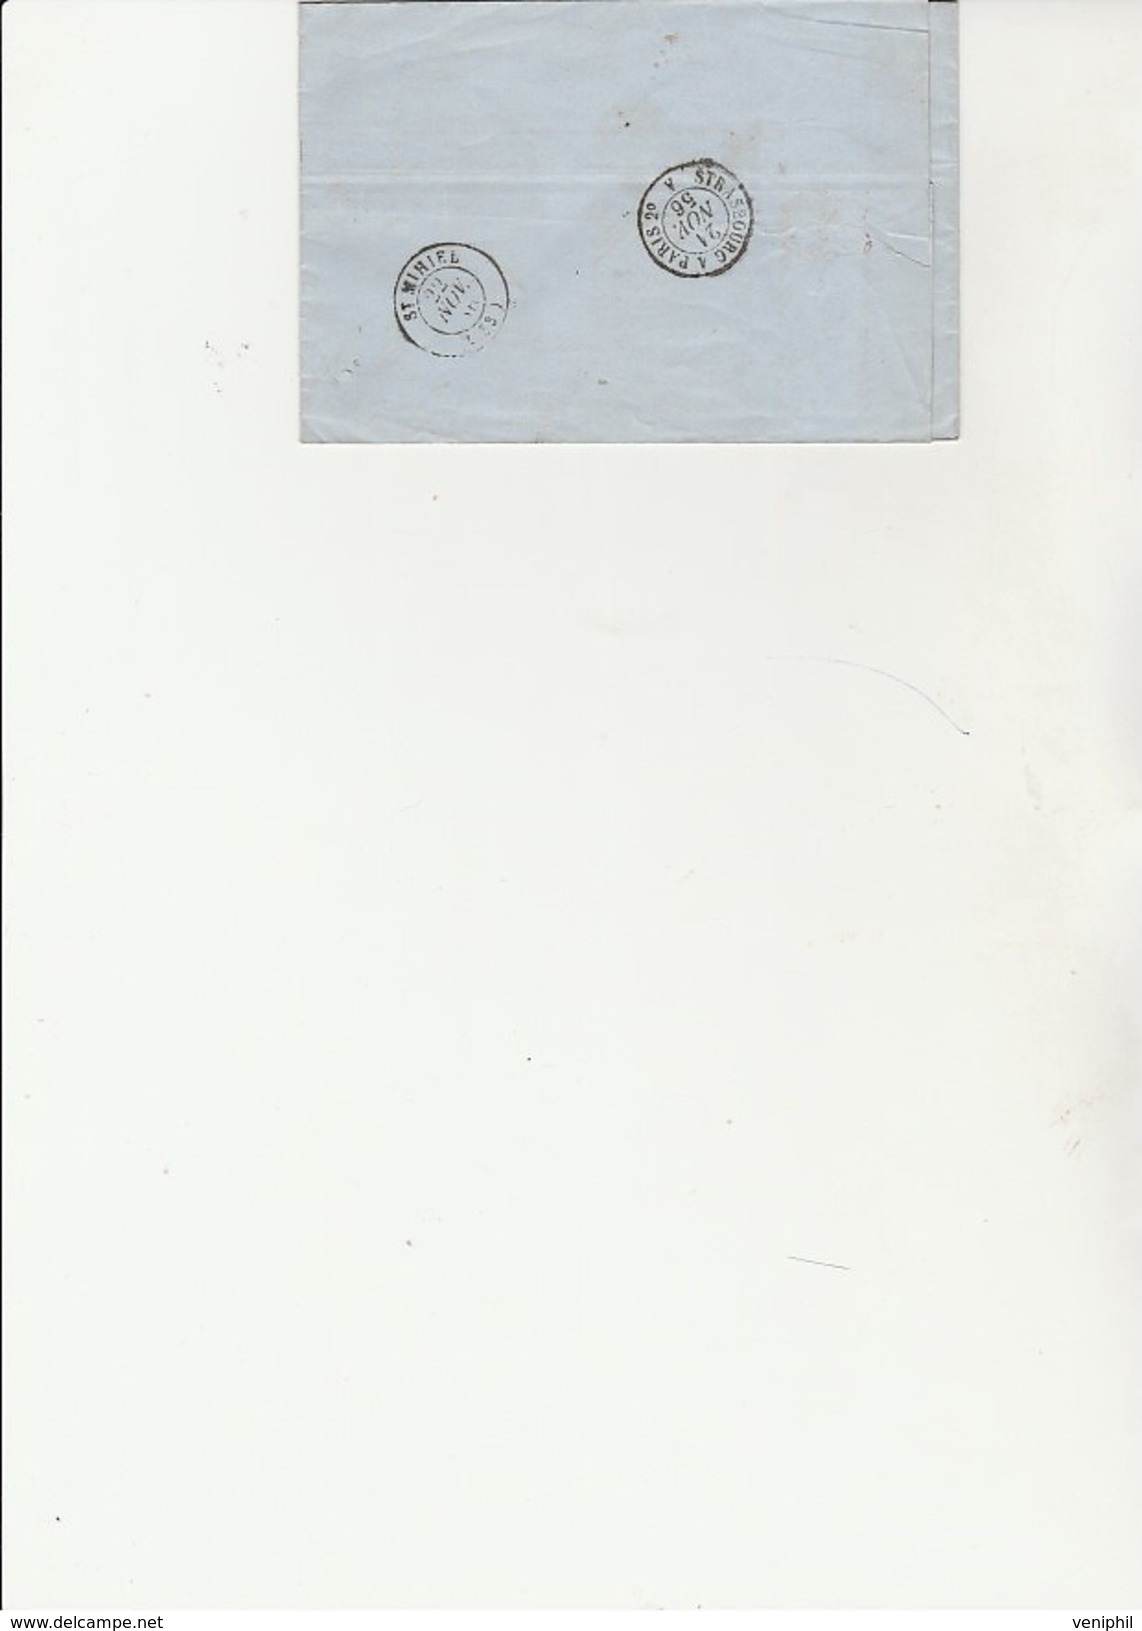 LETTRE AFFRANCHIE N° 14 OBLITERATION PC 1800 - LUNEVILLE -CAD 1856 - 1849-1876: Classic Period